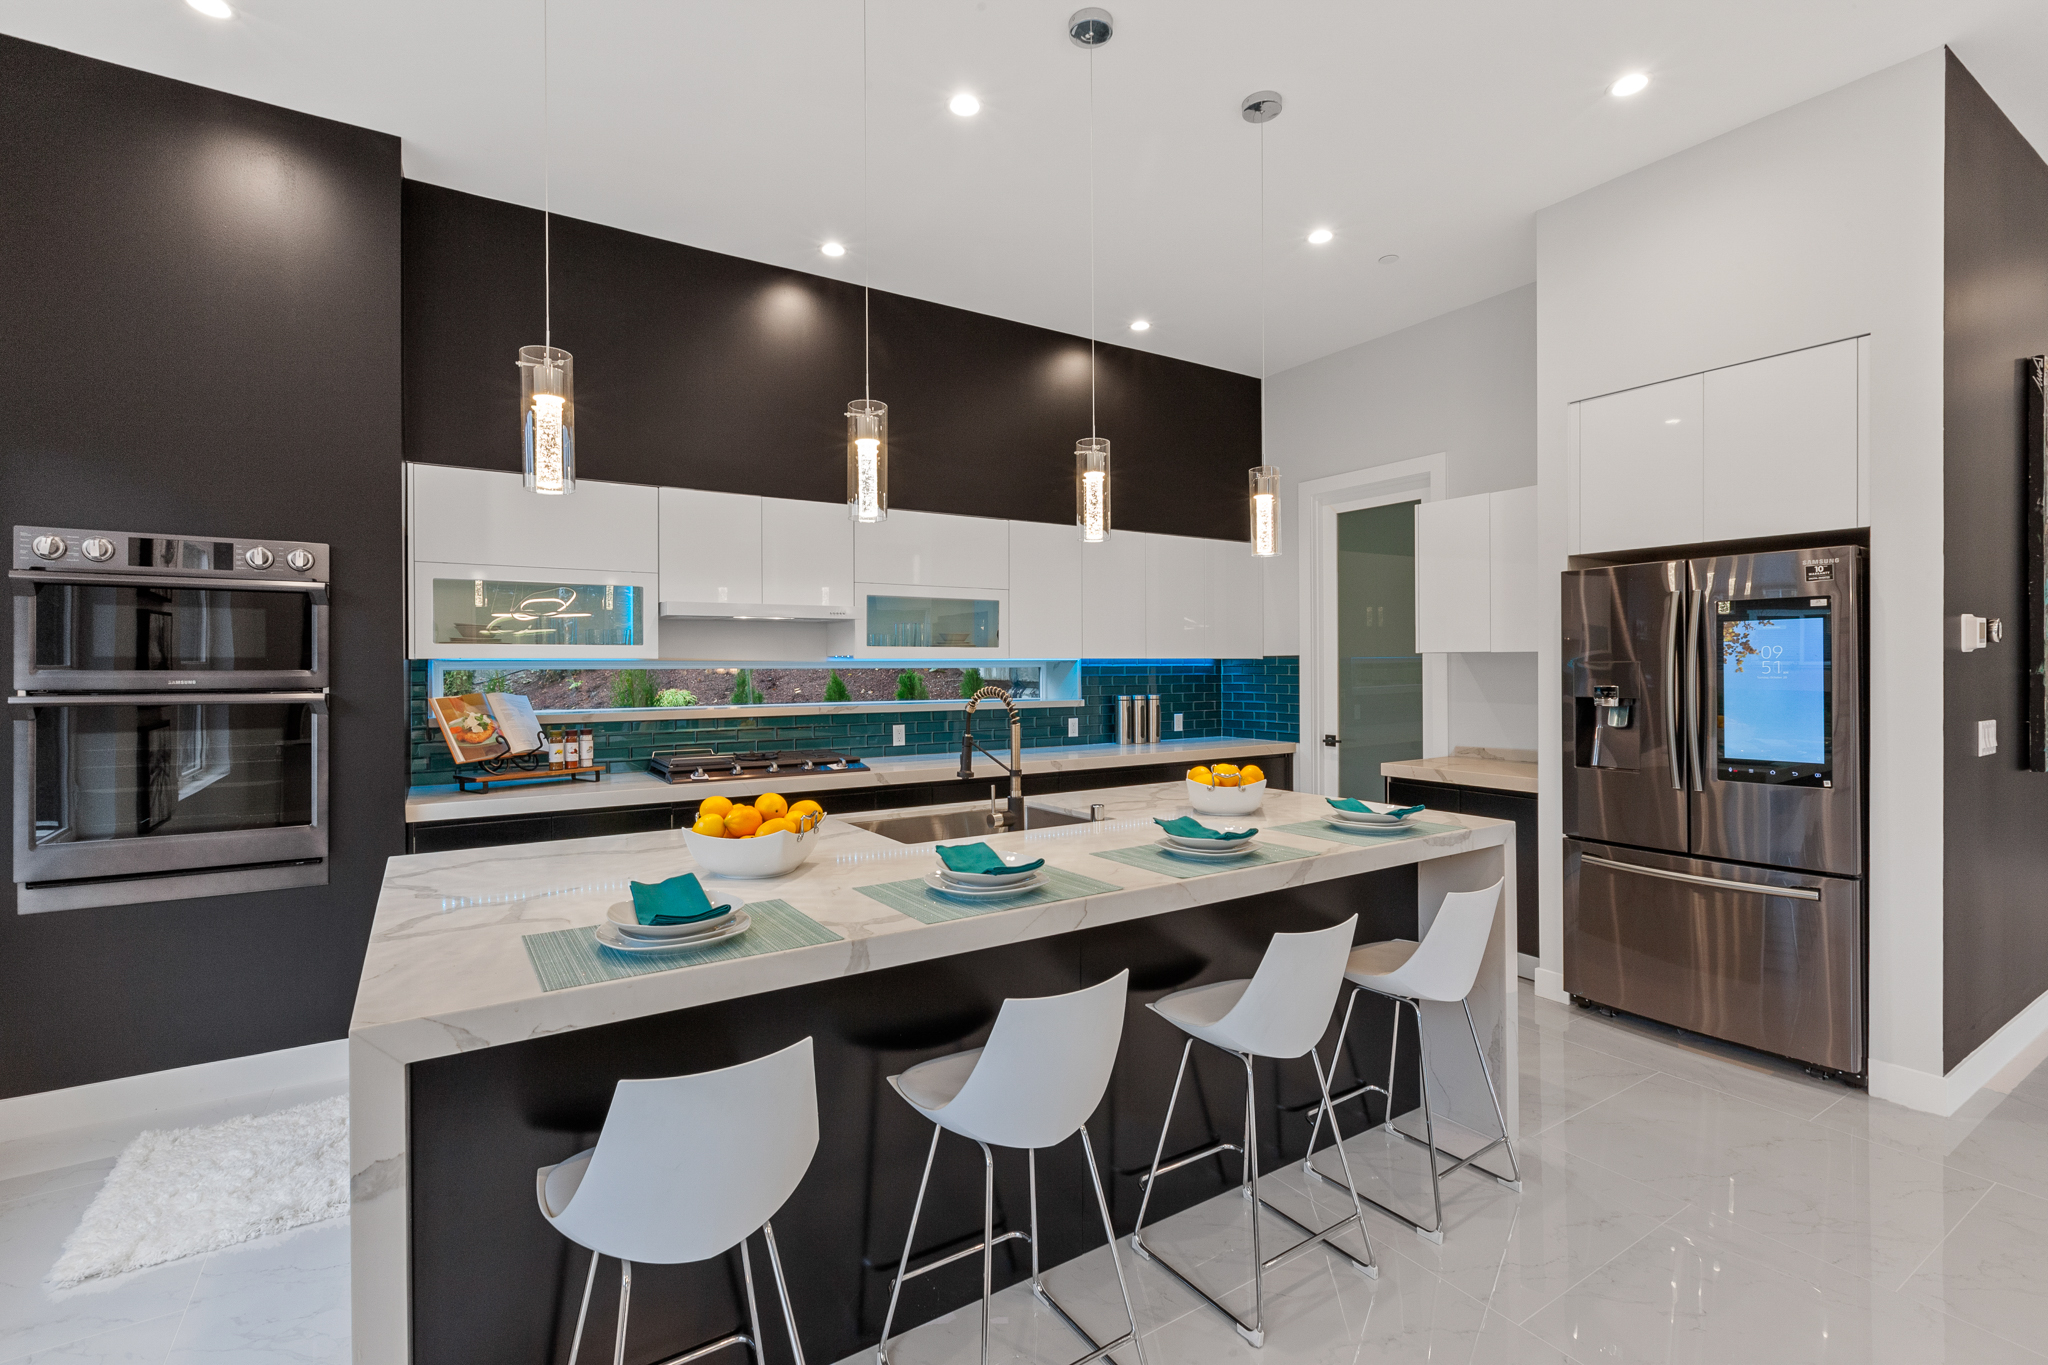 Kitchen - Luxury Real Estate - 18109 84th Ave W, Edmonds